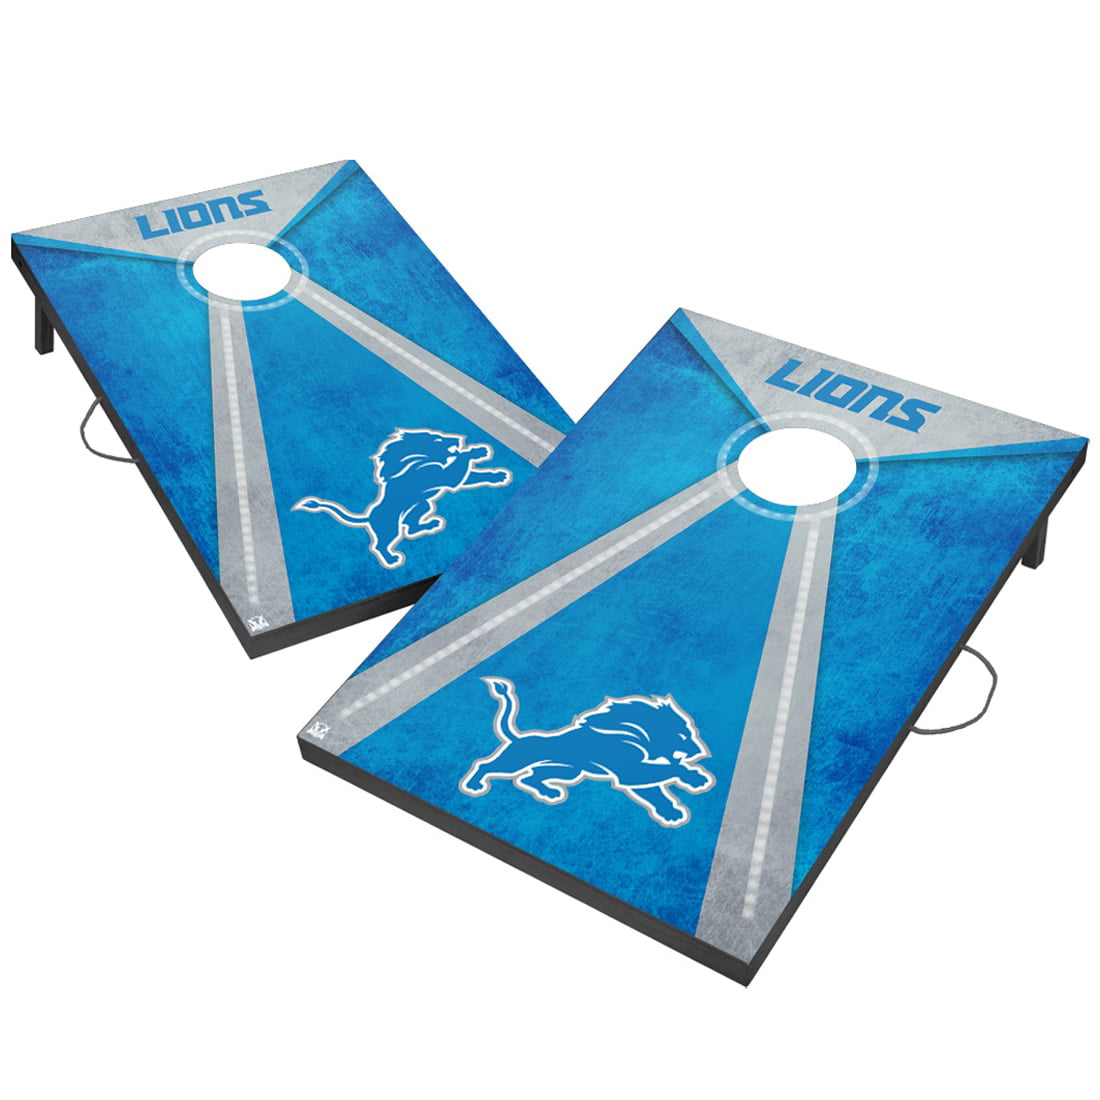 Detroit Lions Cornhole Board Decals 6 PC Set Kit SKY BLUE Vinyl Decal Kit 